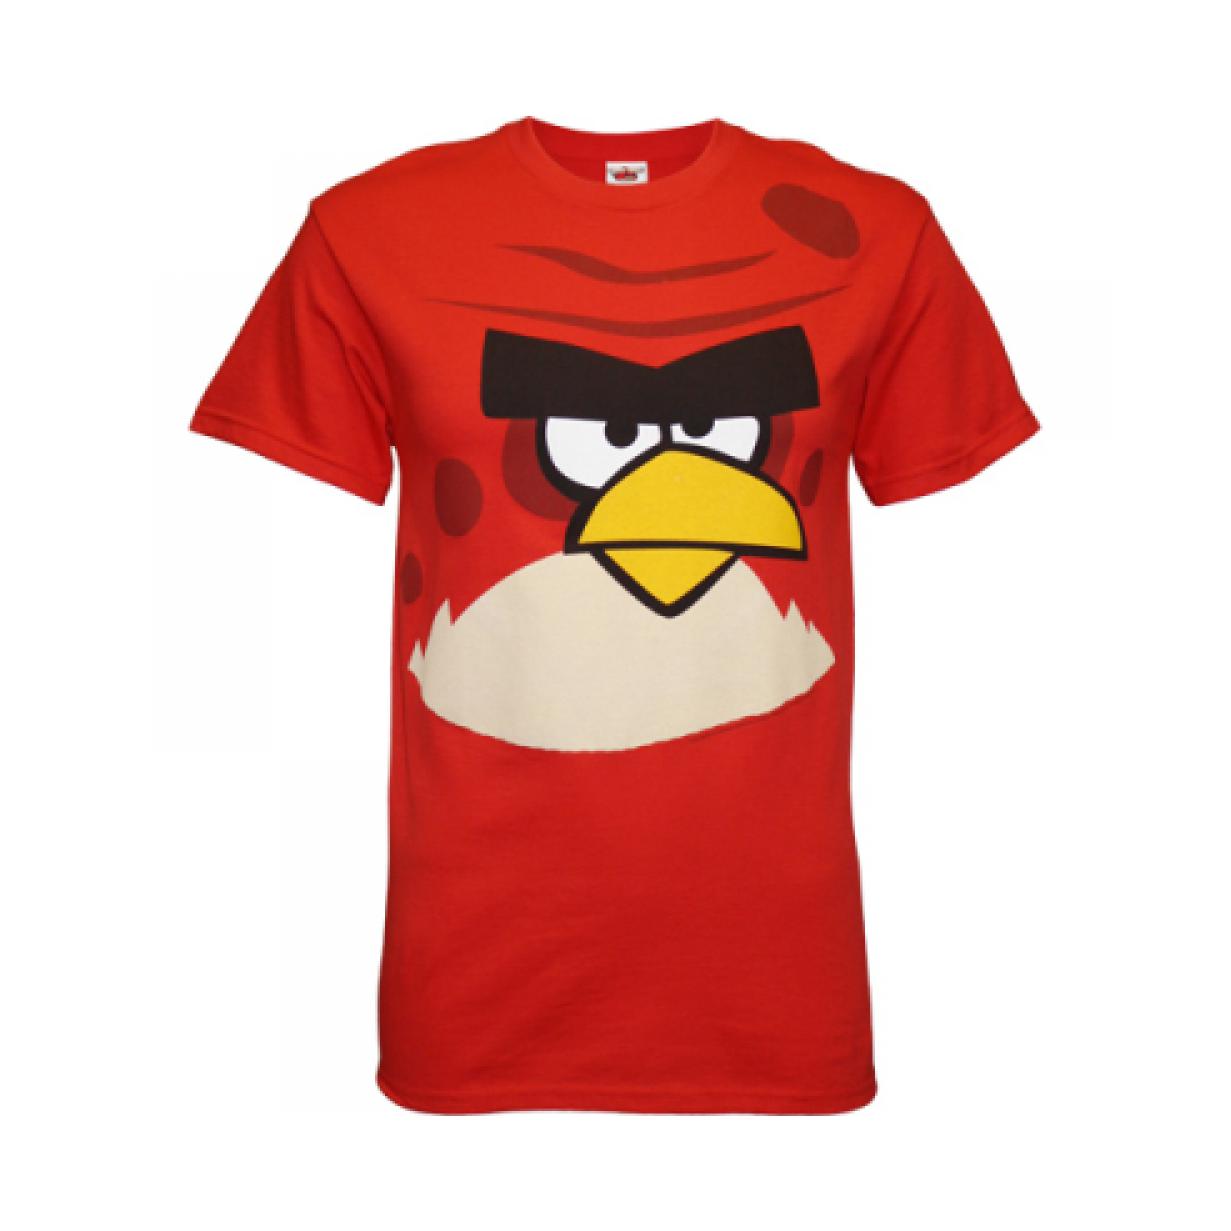 Angry Birds - Red bird T-shirt